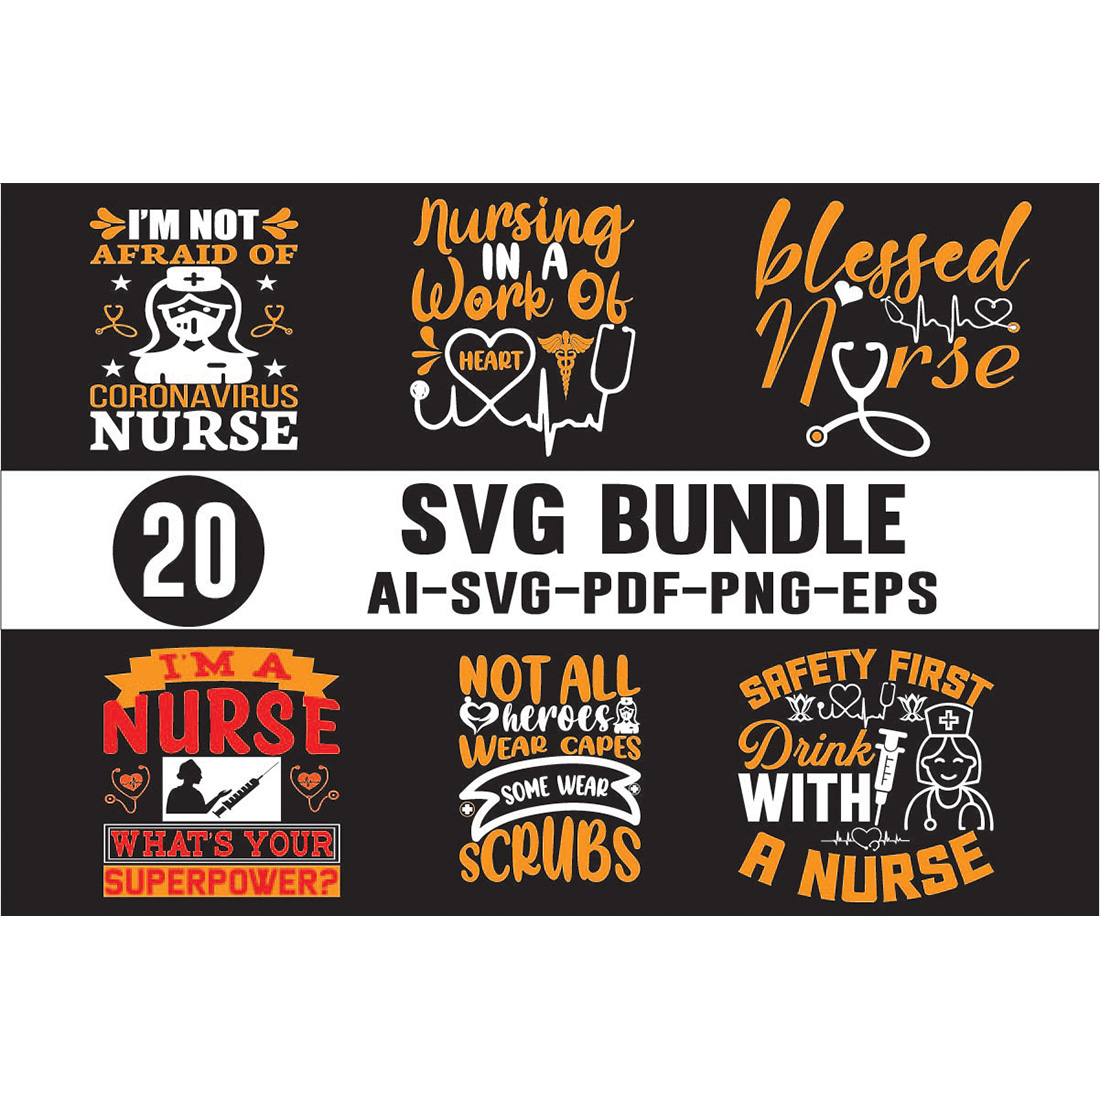 Nurse SVG Designs Bundle cover image.